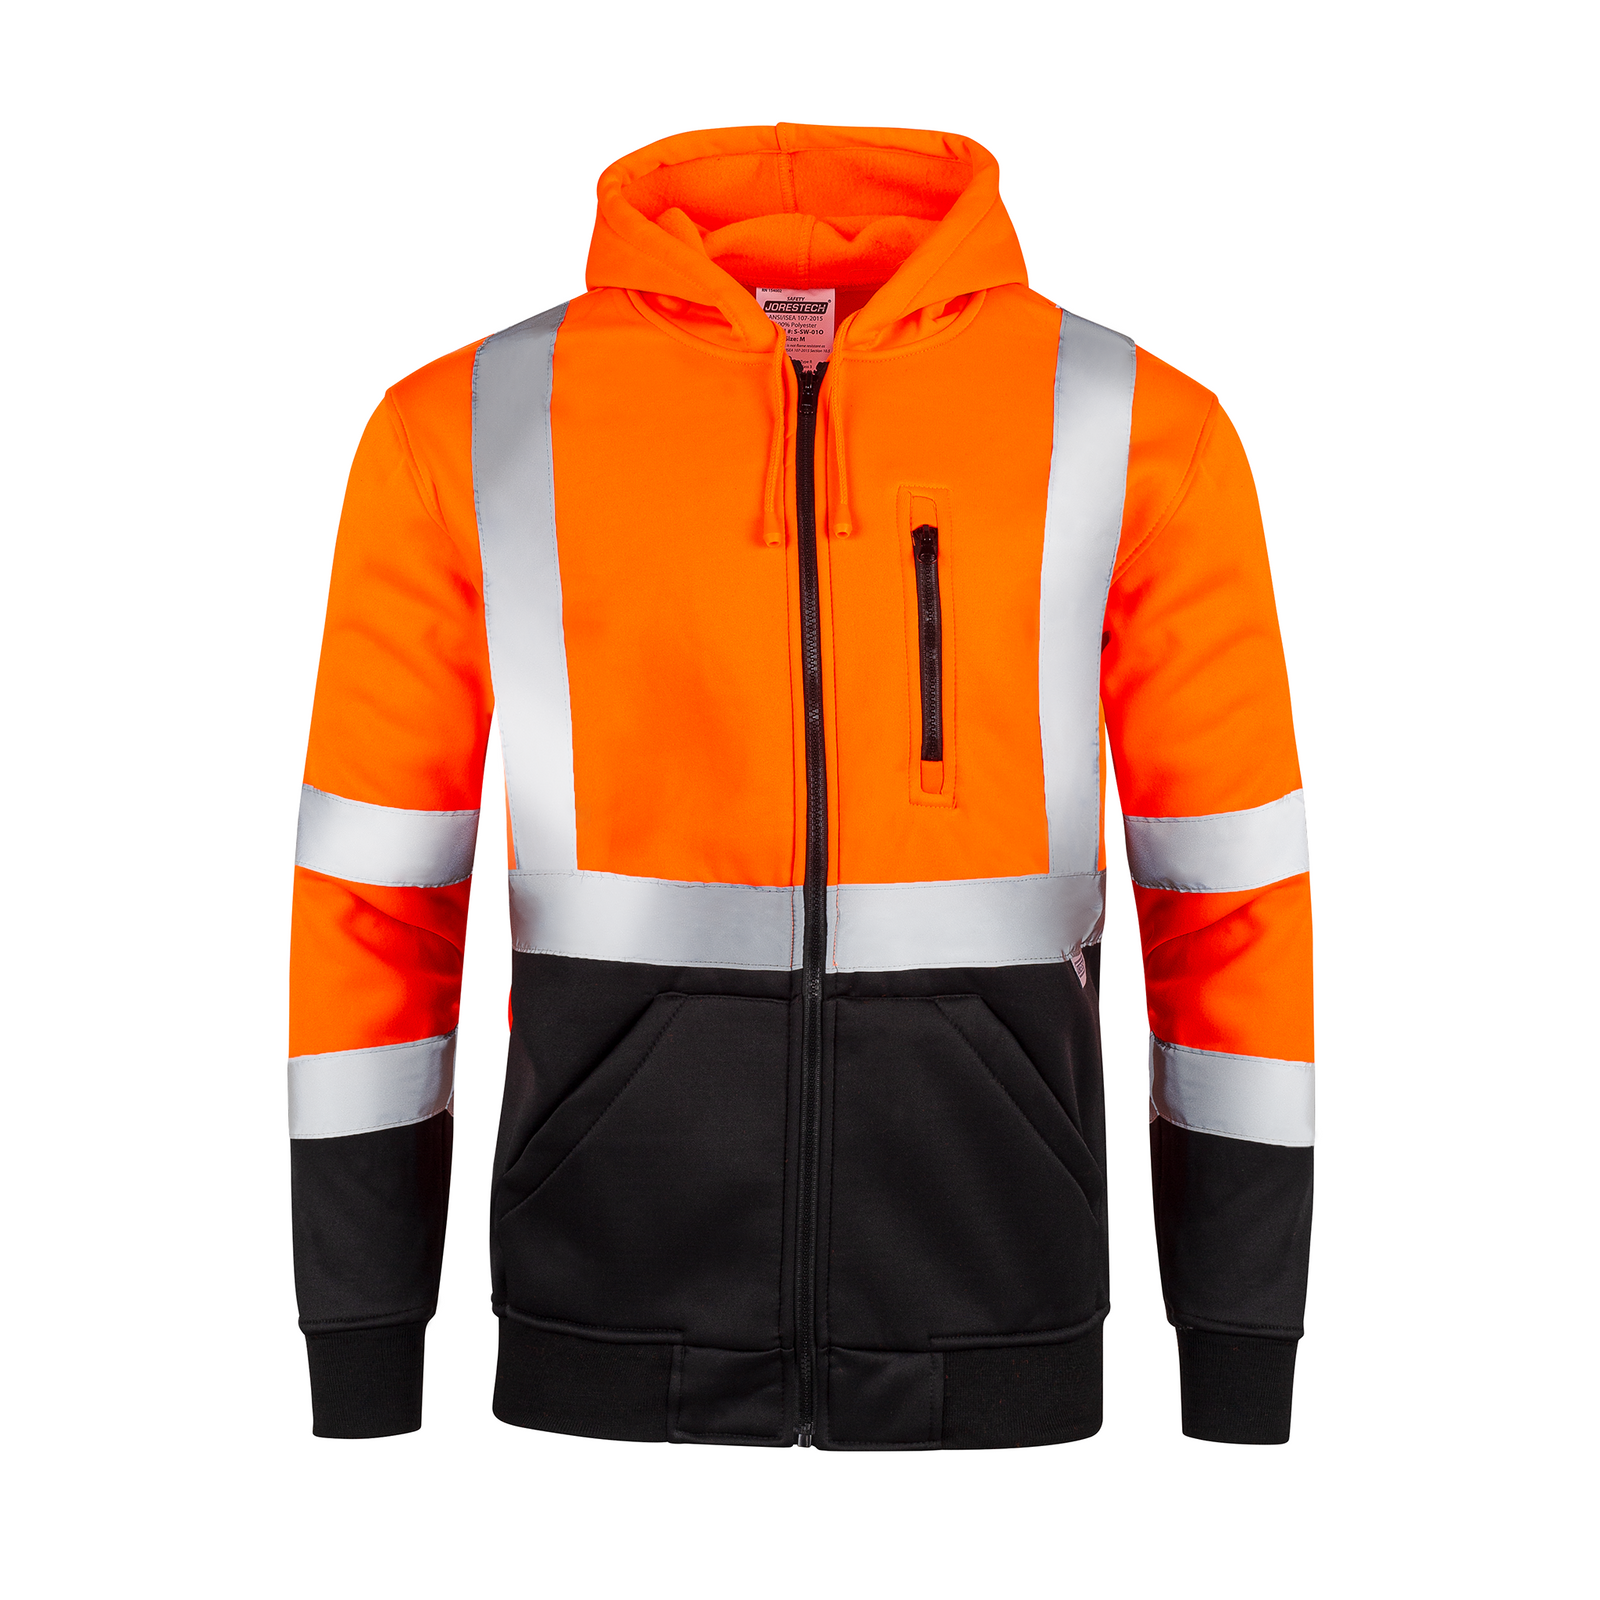  Hi-vis orange safety hooded sweatshirt with reflective stripes ANSI class 3 type R